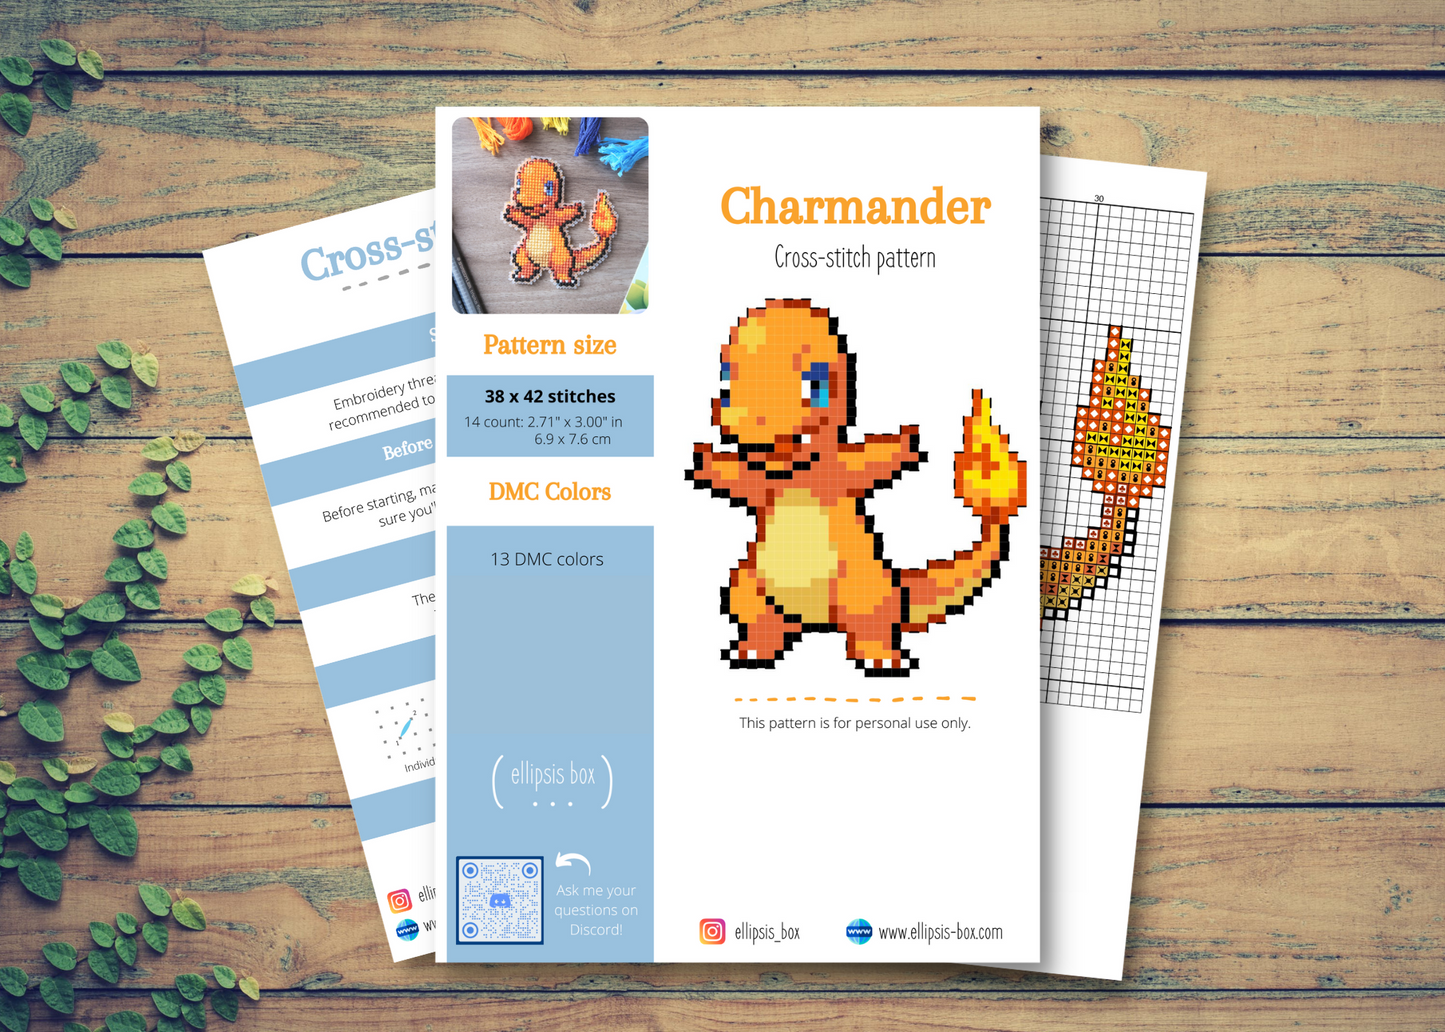 Cross-stitch pattern - Charmander from Pokemon